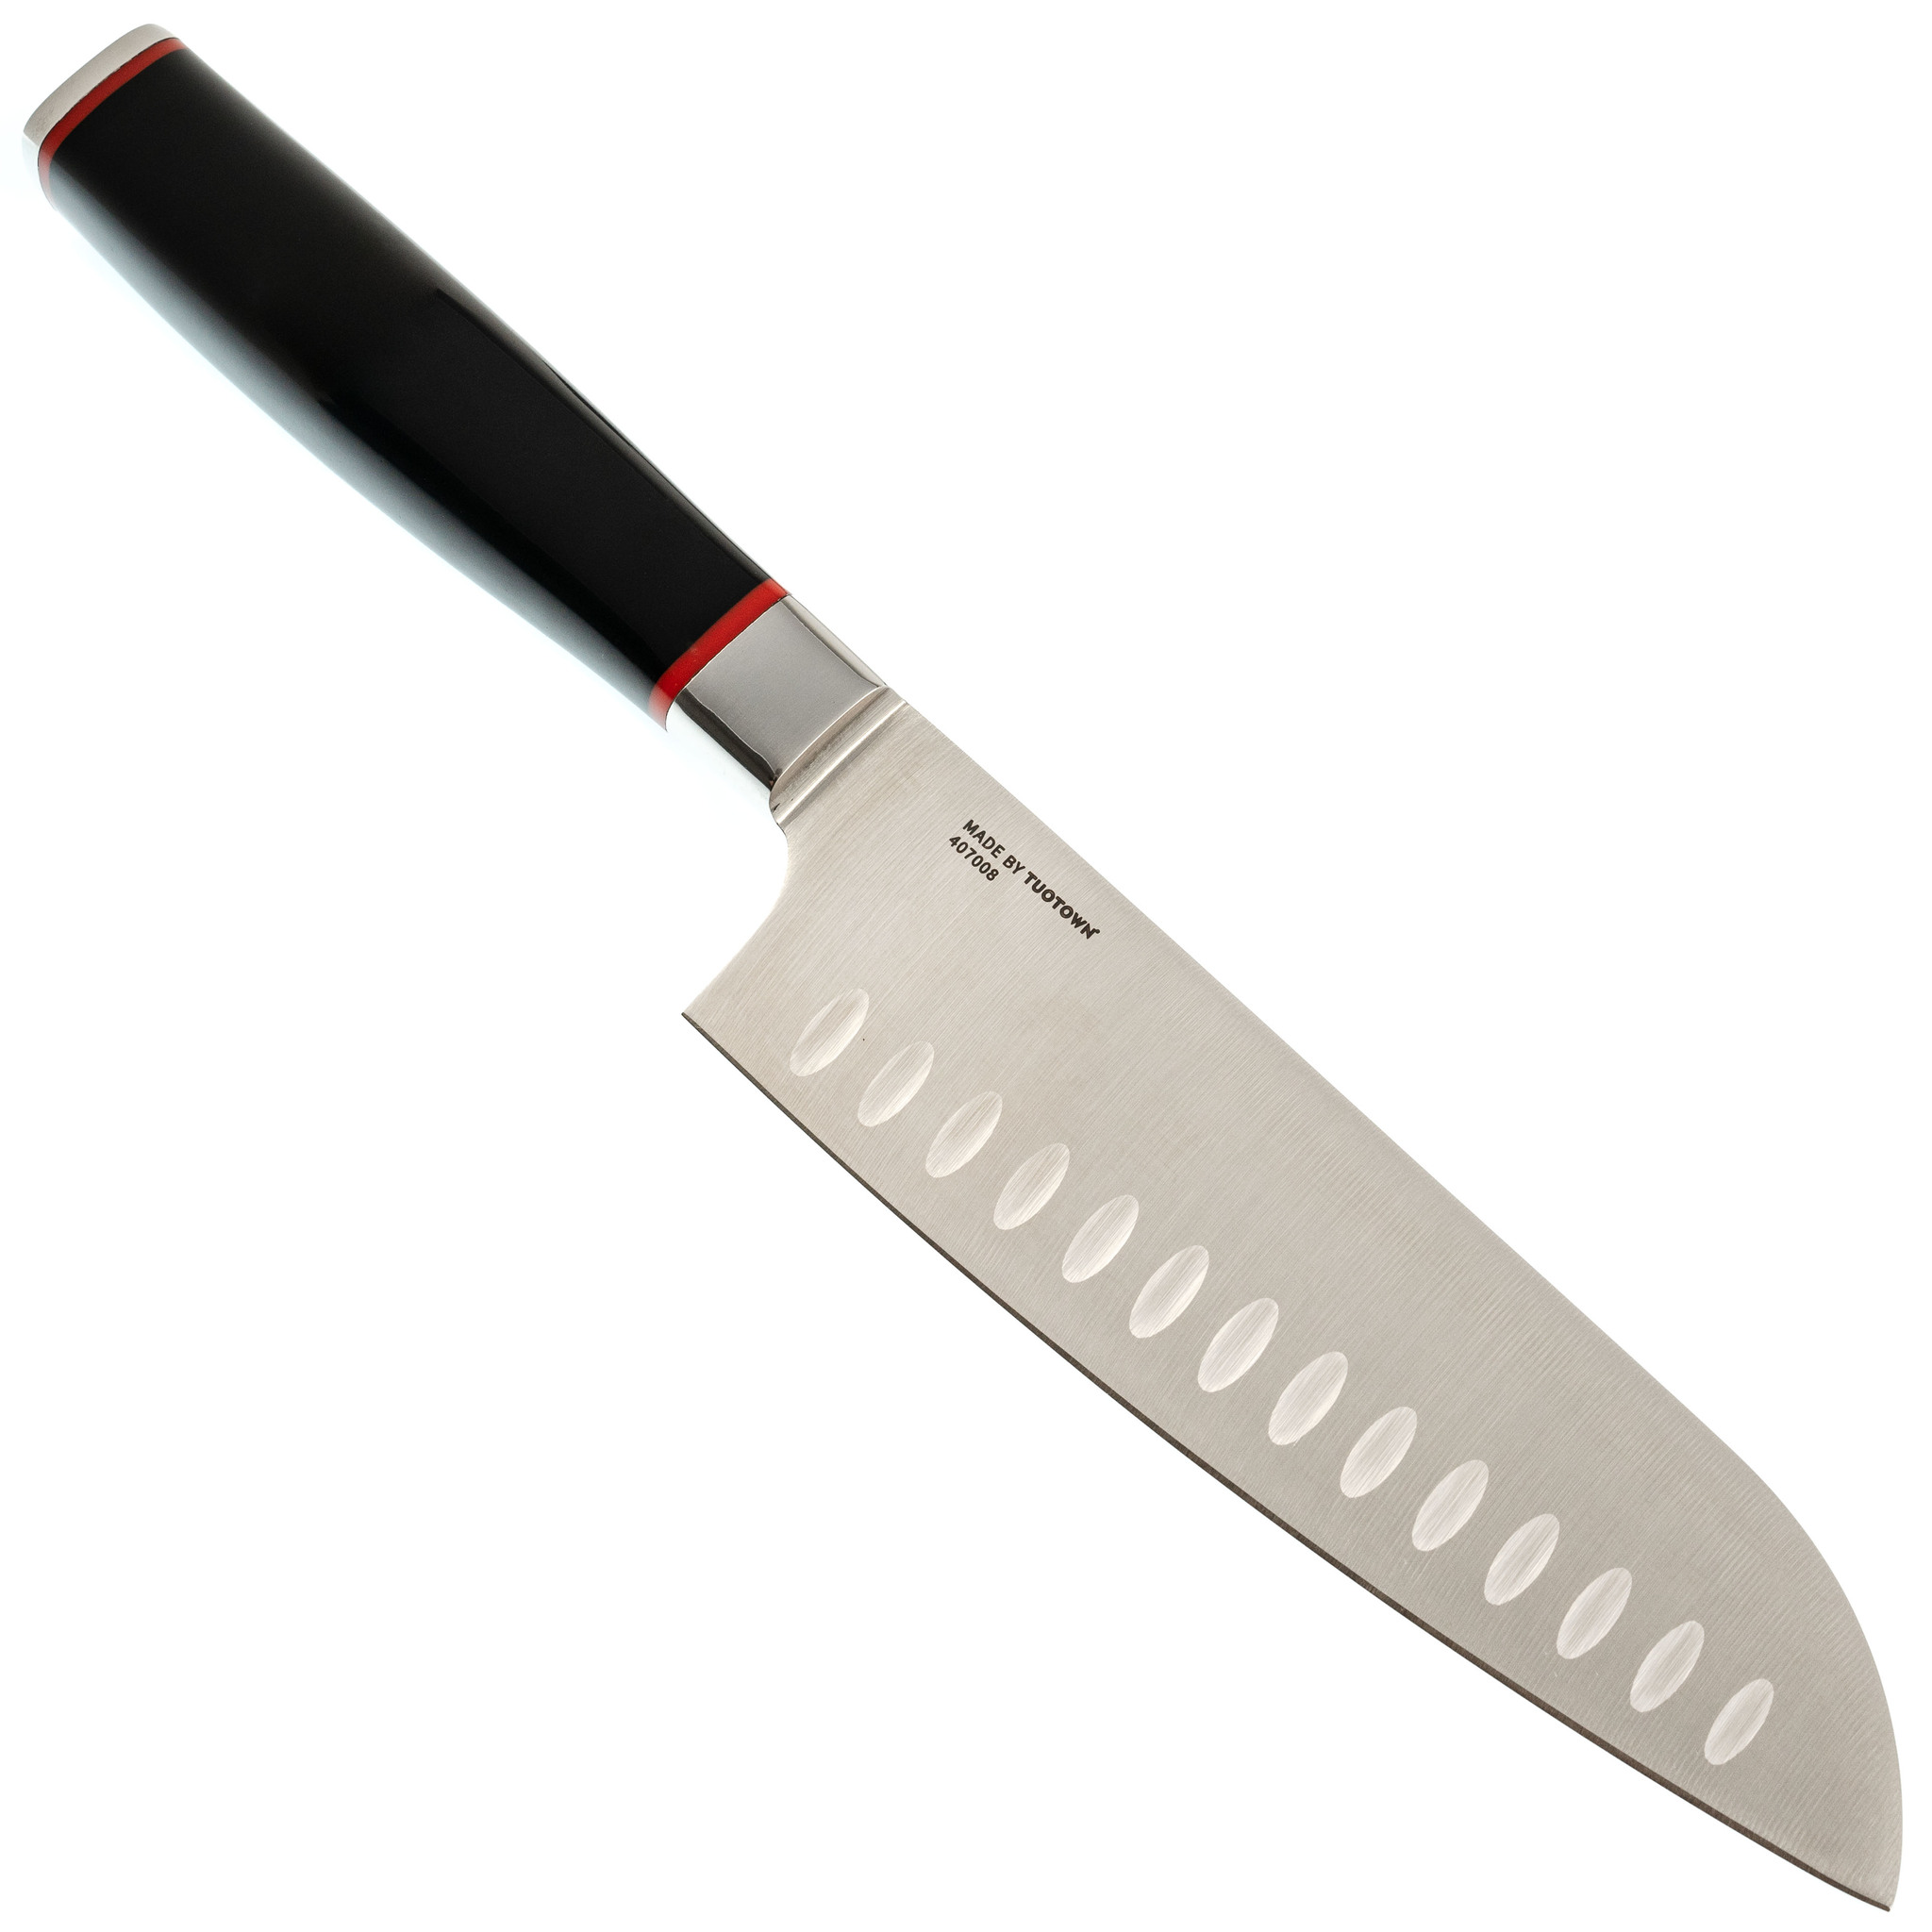 Кухонные ножи tuotown